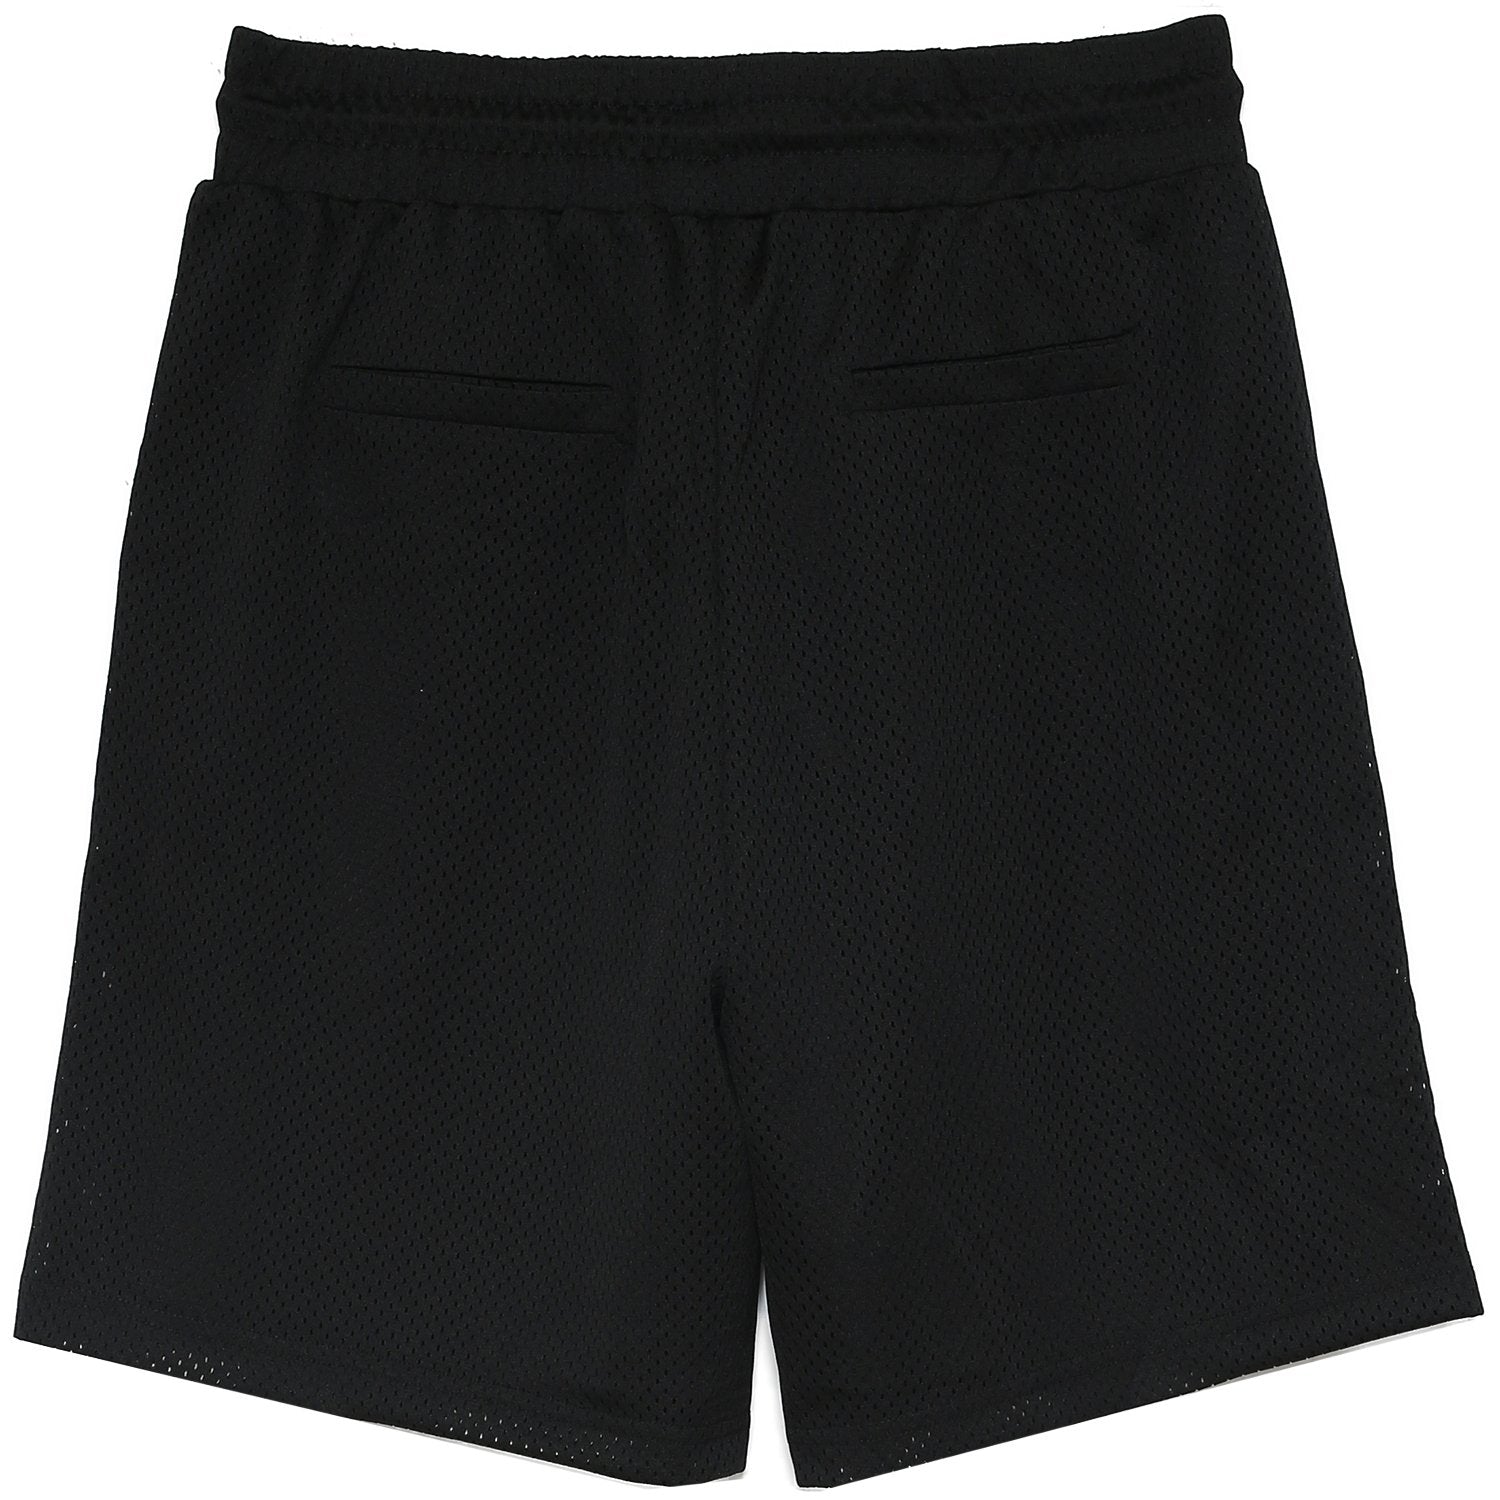 Schwarze Mesh-Shorts mit Logo